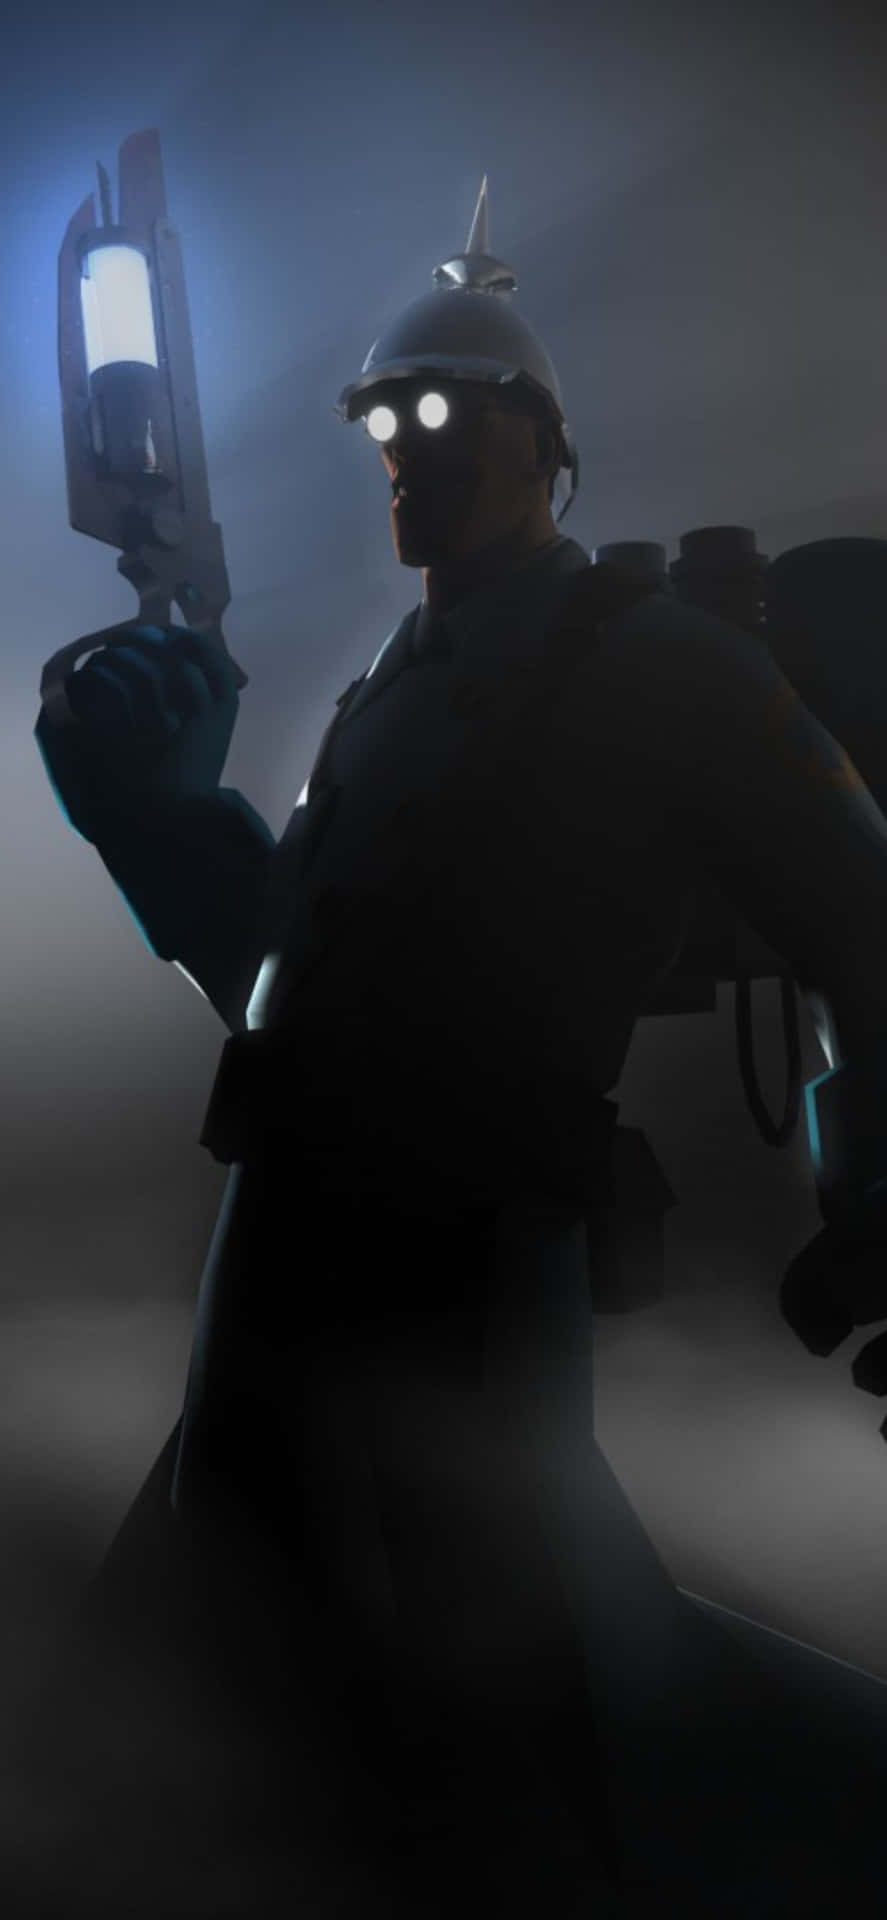 Iphonexs Bakgrund Med Team Fortress 2 Medic Silhouette.